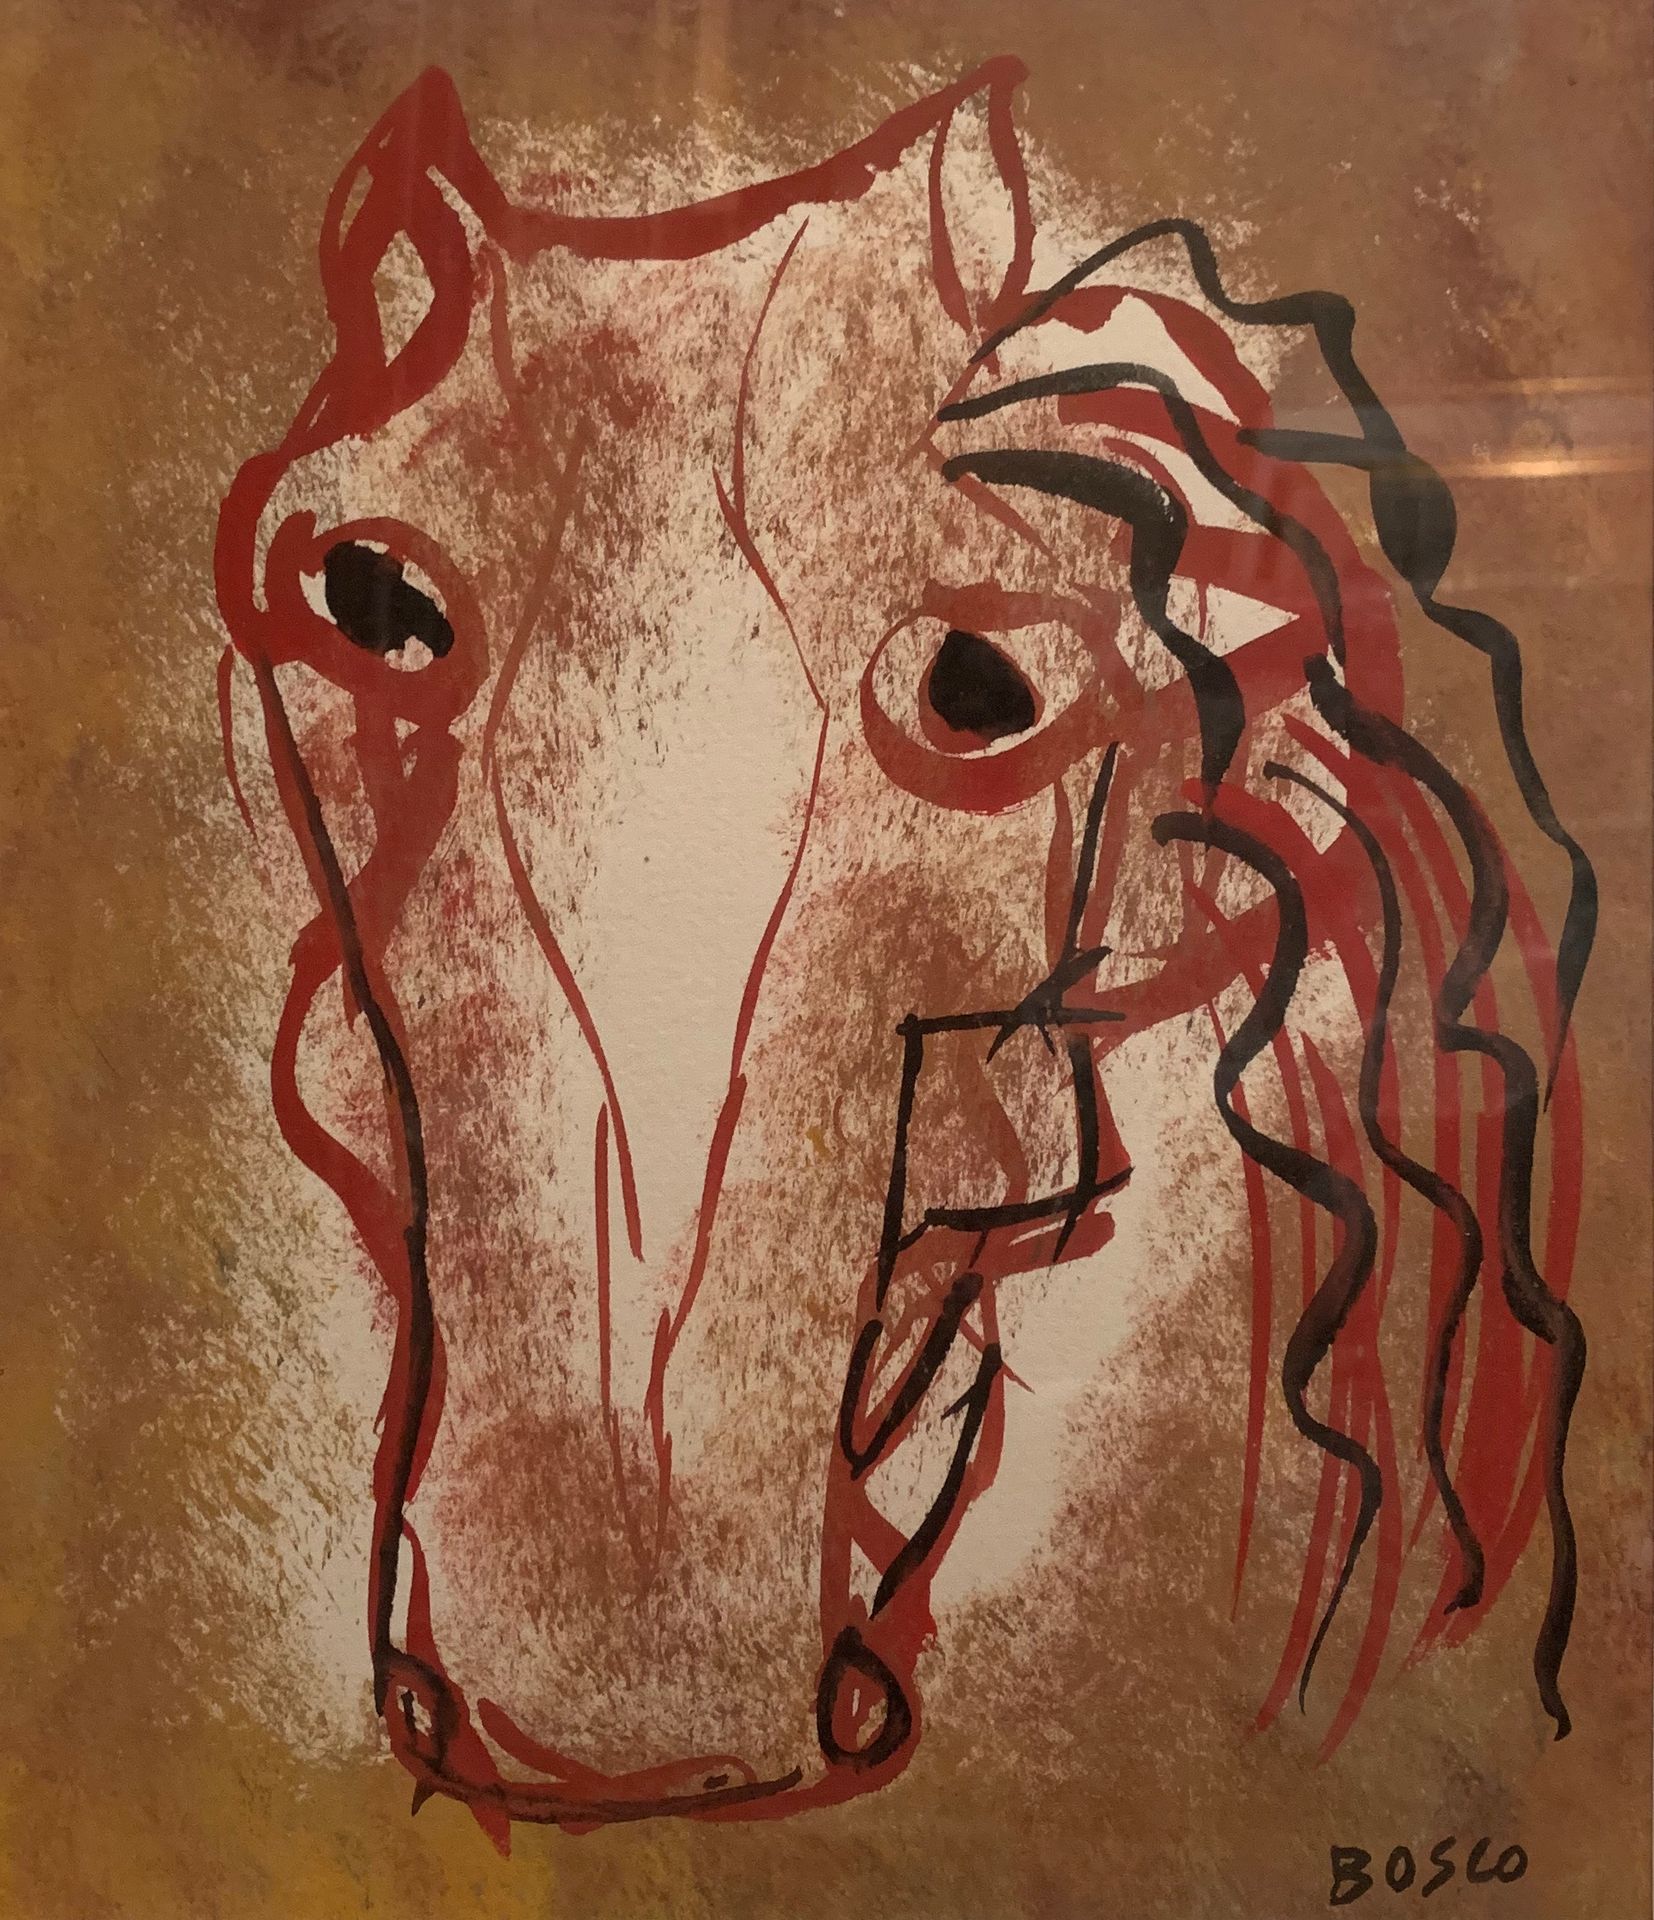 Null 皮埃尔-博斯克 (1909-1993)

一匹马的头

右下角有签名的水彩画

25 x 22 cm